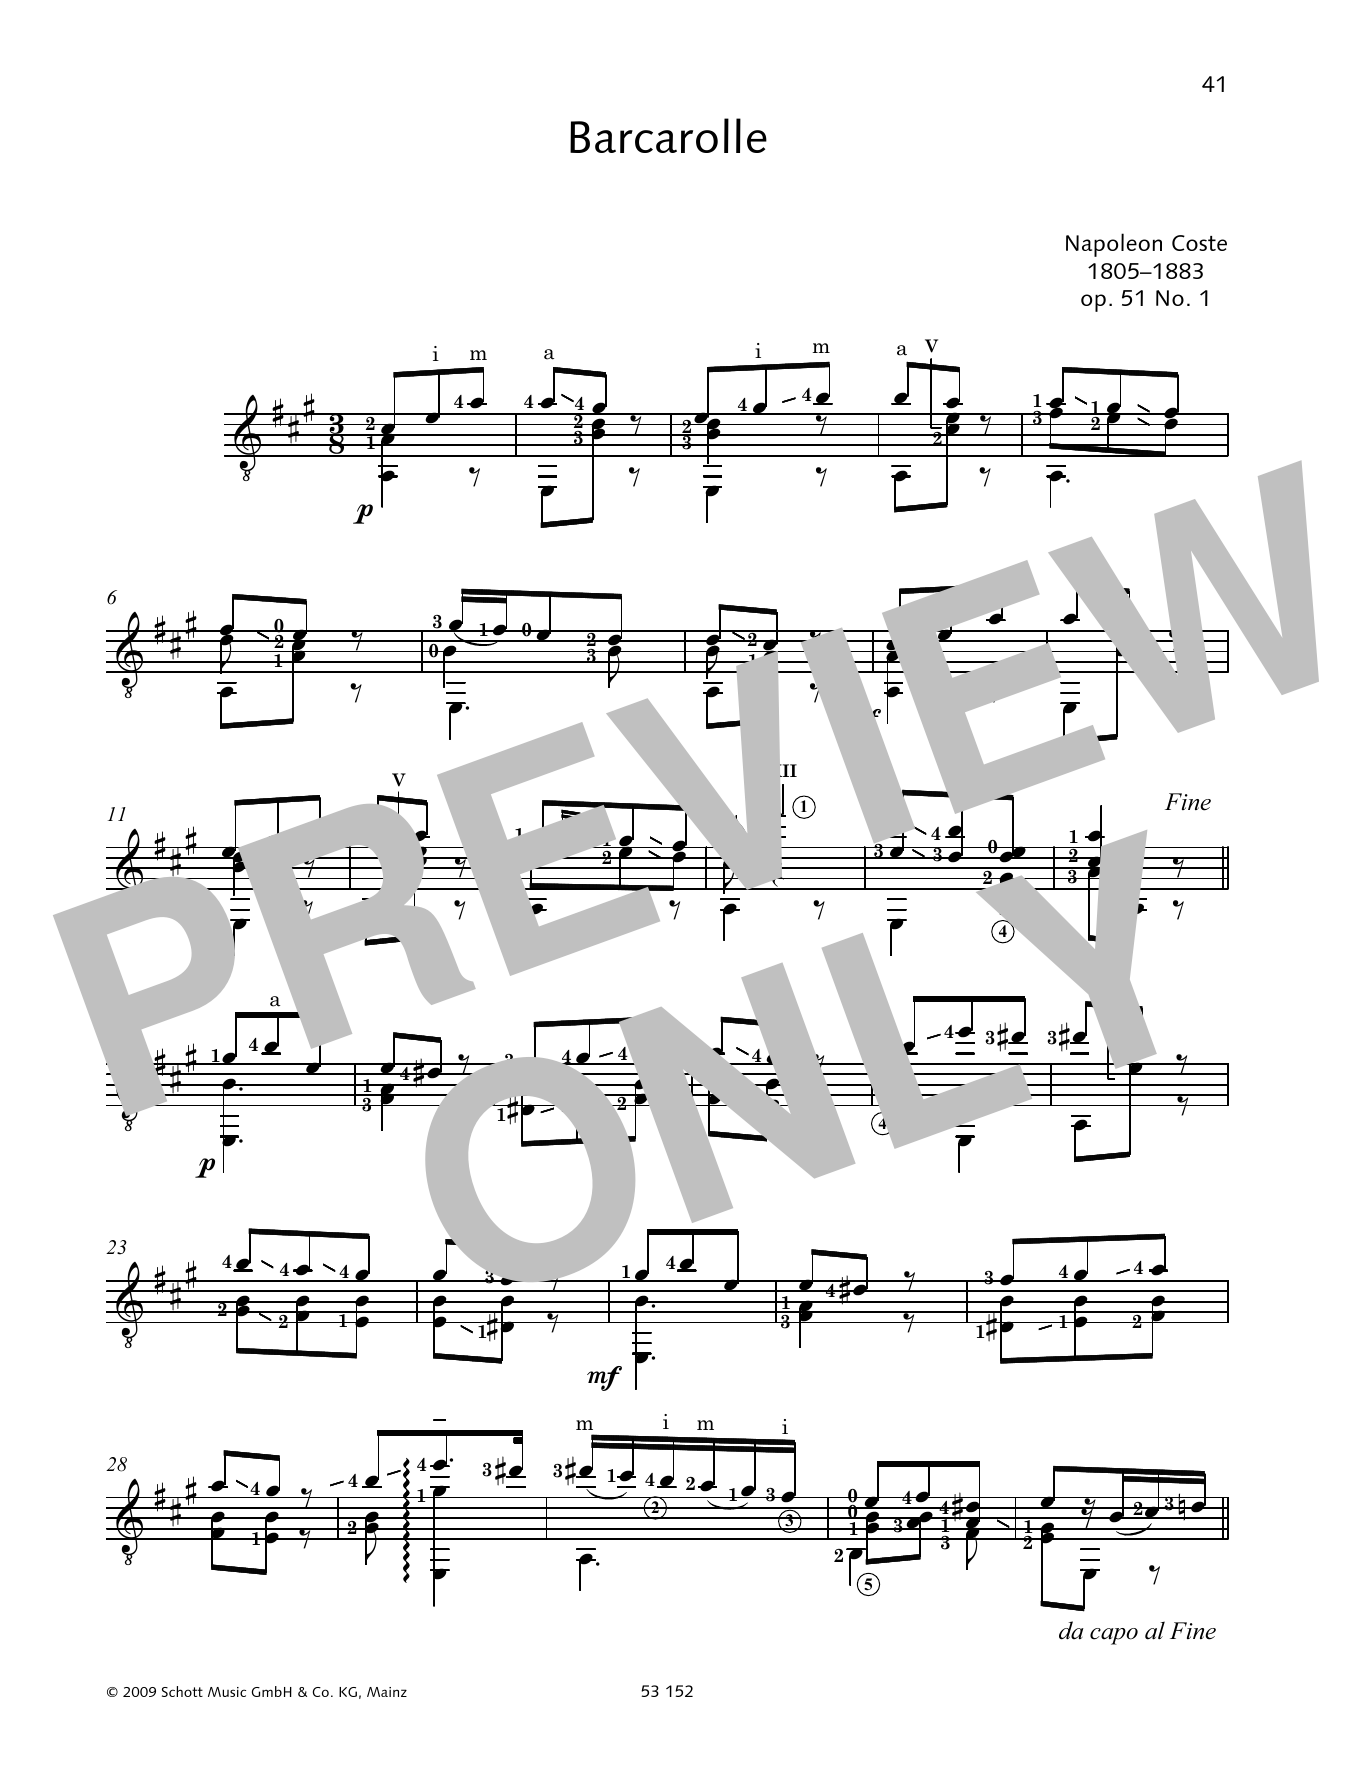 Konrad Ragossnig Barcarolle Sheet Music Notes & Chords for Solo Guitar - Download or Print PDF